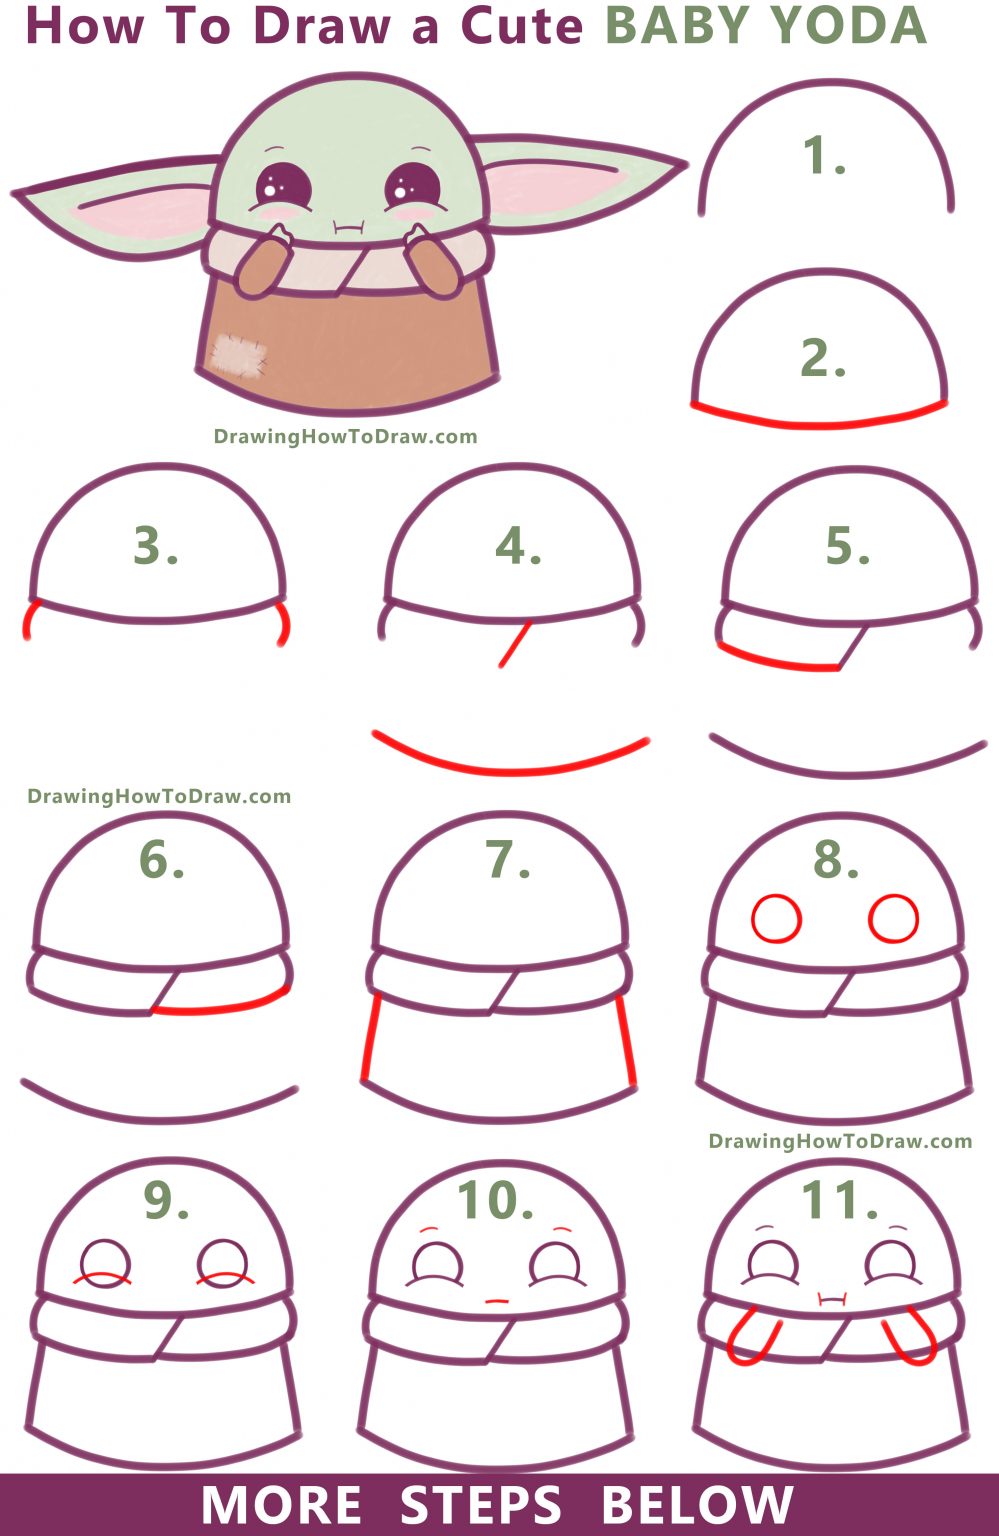 How to Draw a Cute Cartoon Baby Yoda (Kawaii / Chibi) Easy Step by Step